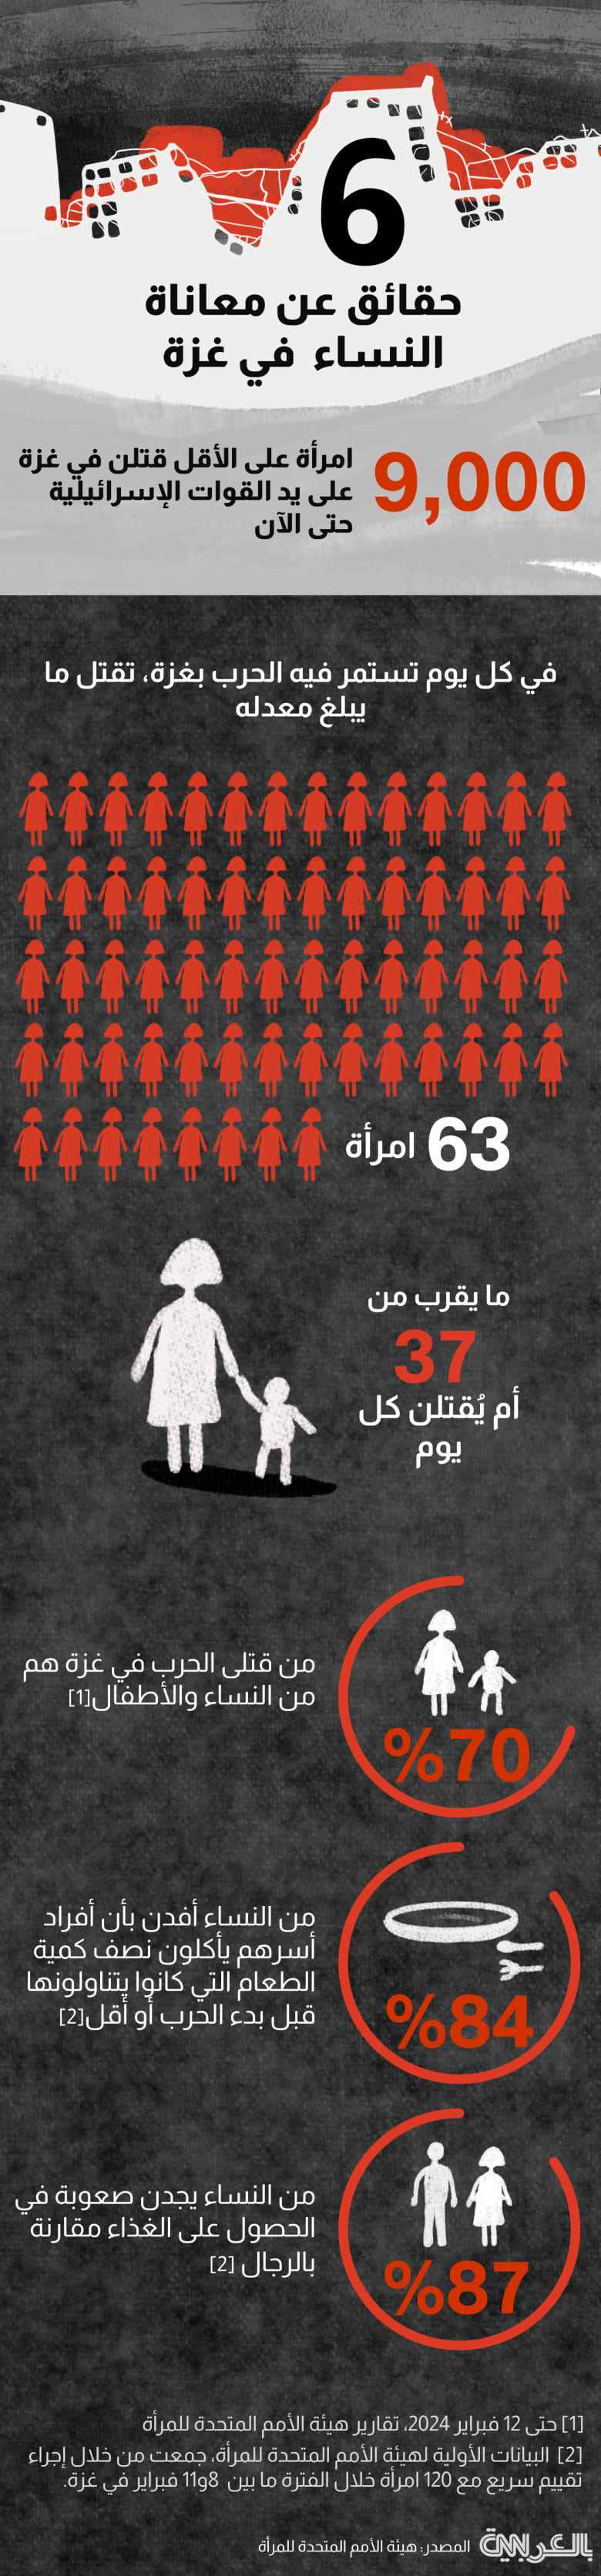 Gaza women facts